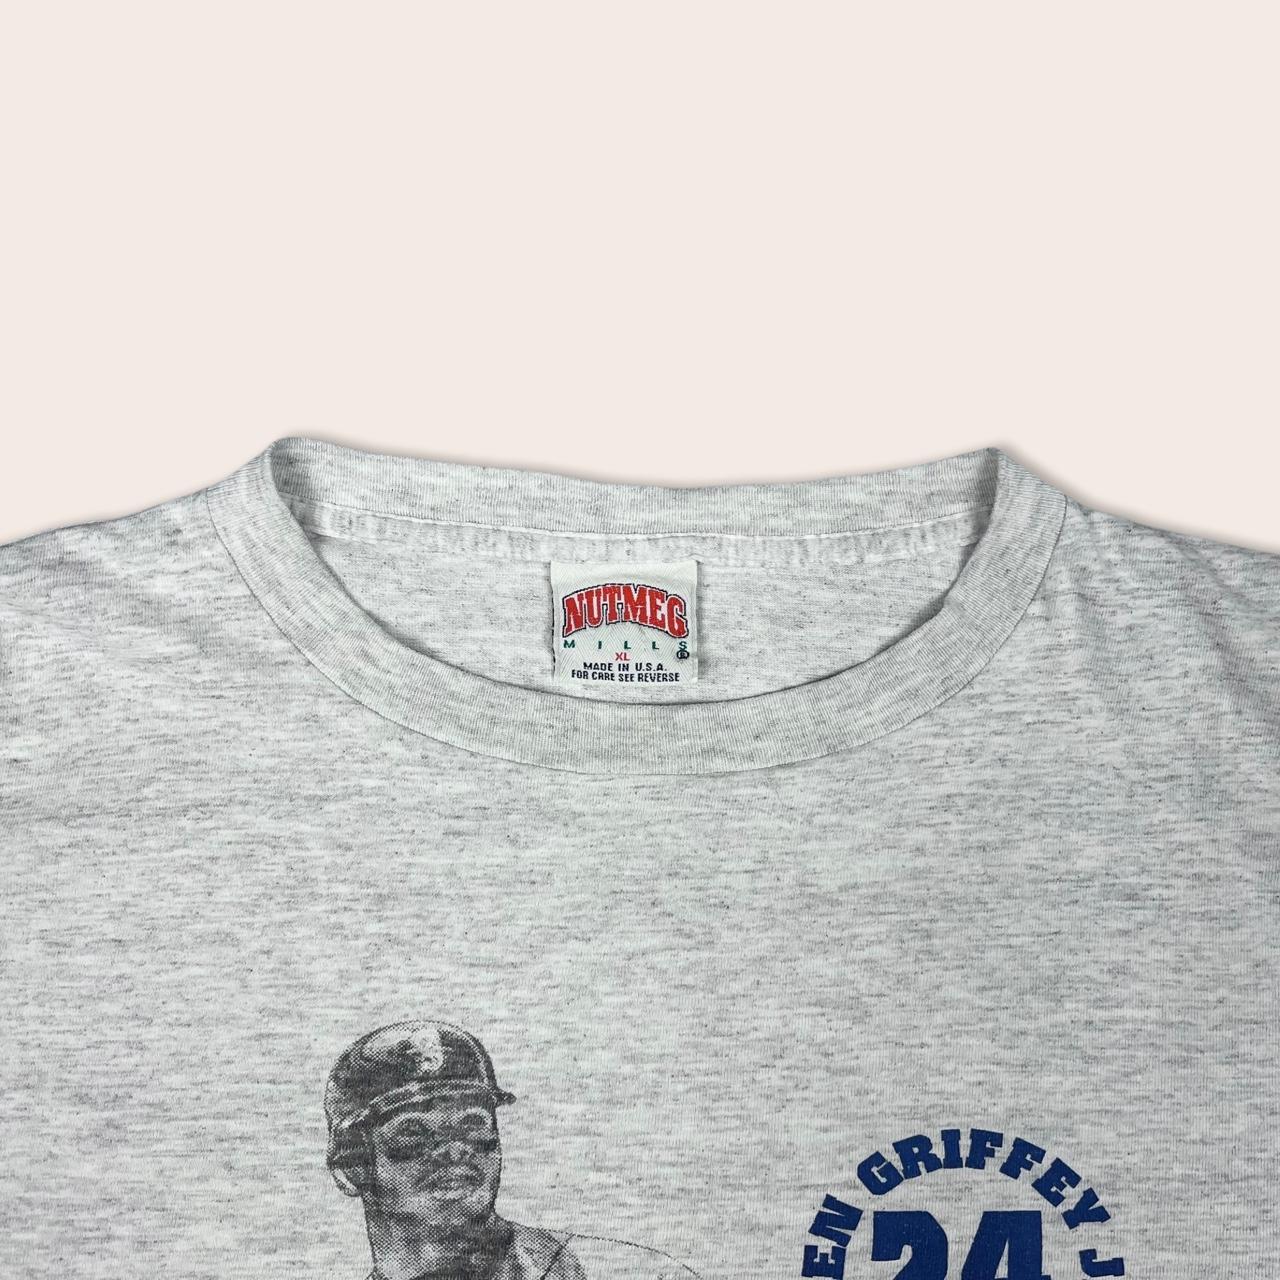 Vintage 90s Chicago White Sox MLB 1995 Nutmeg T-shirt